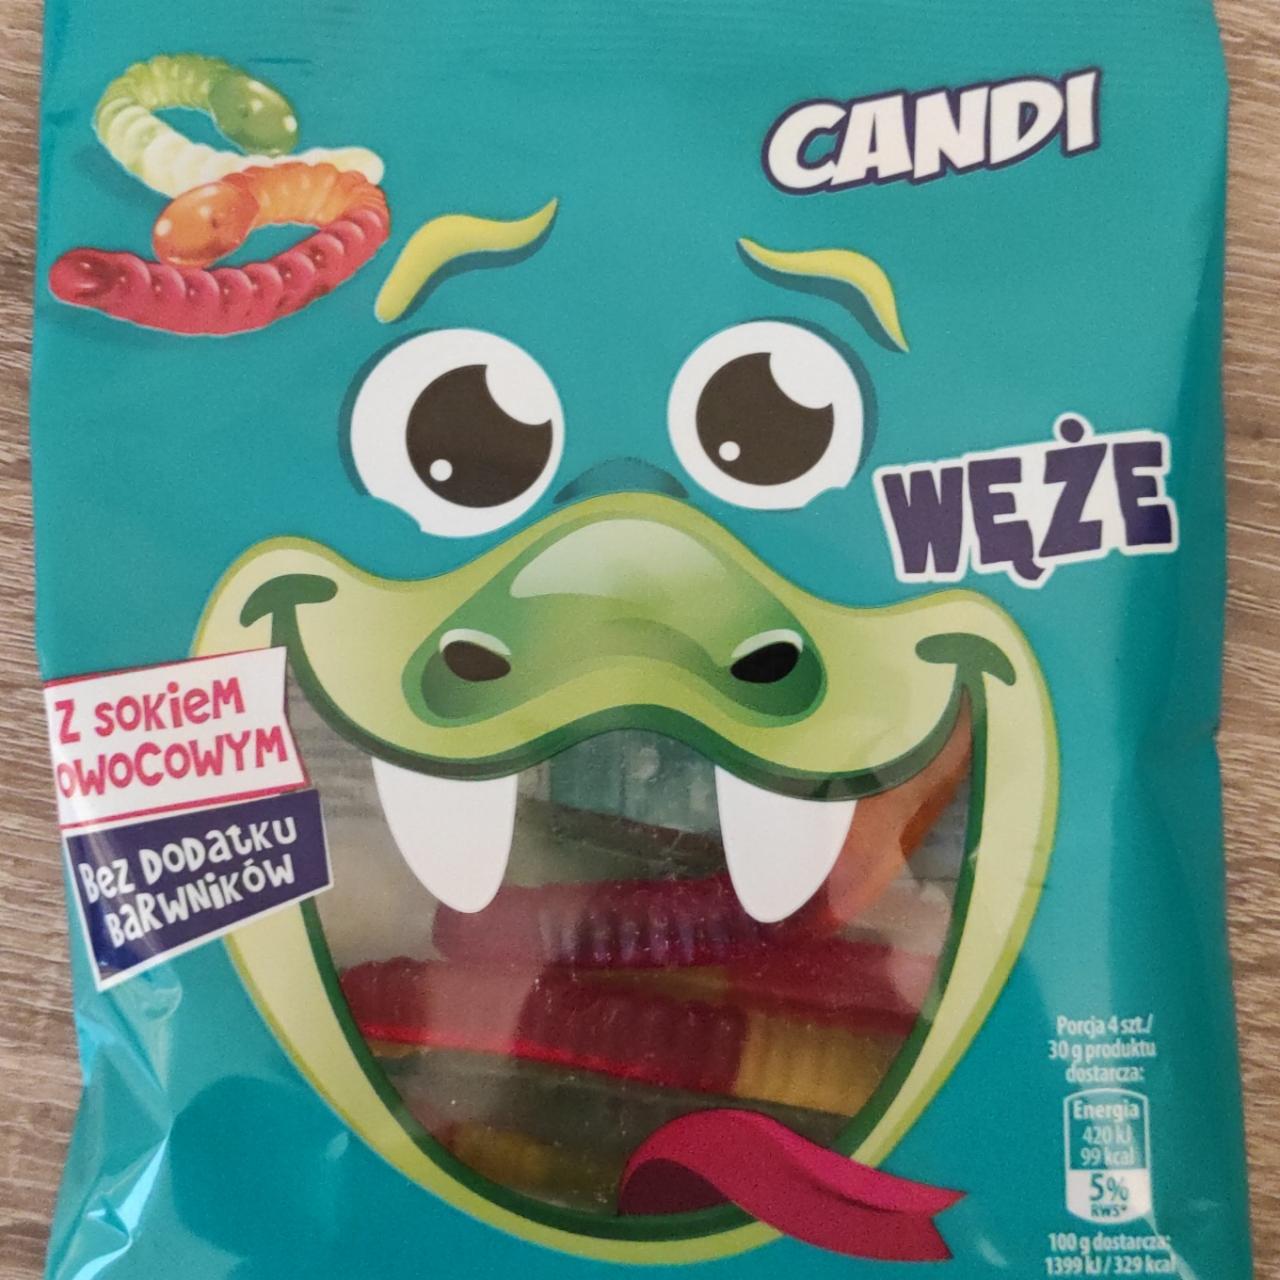 Фото - Желейные конфеты weze Candi